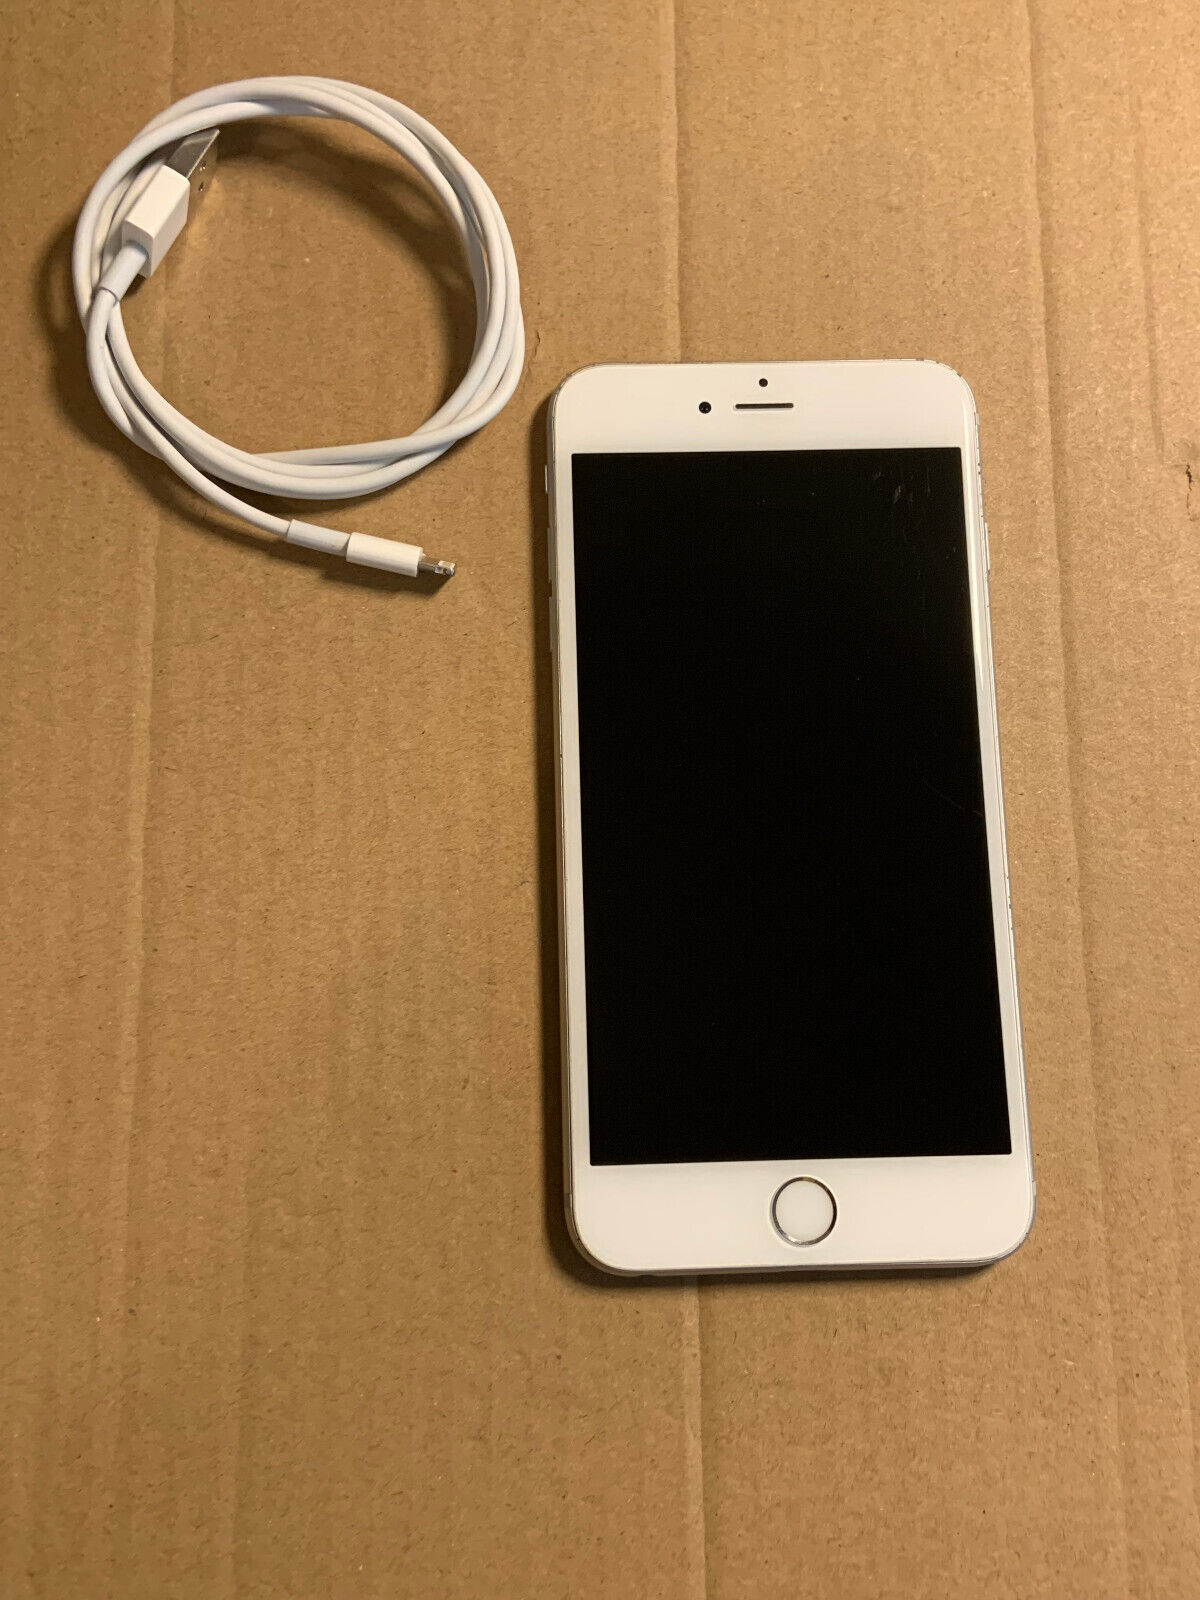 Apple iPhone 6s Plus - 64GB - Silver (Unlocked) A1687 (CDMA + GSM) - $128.70